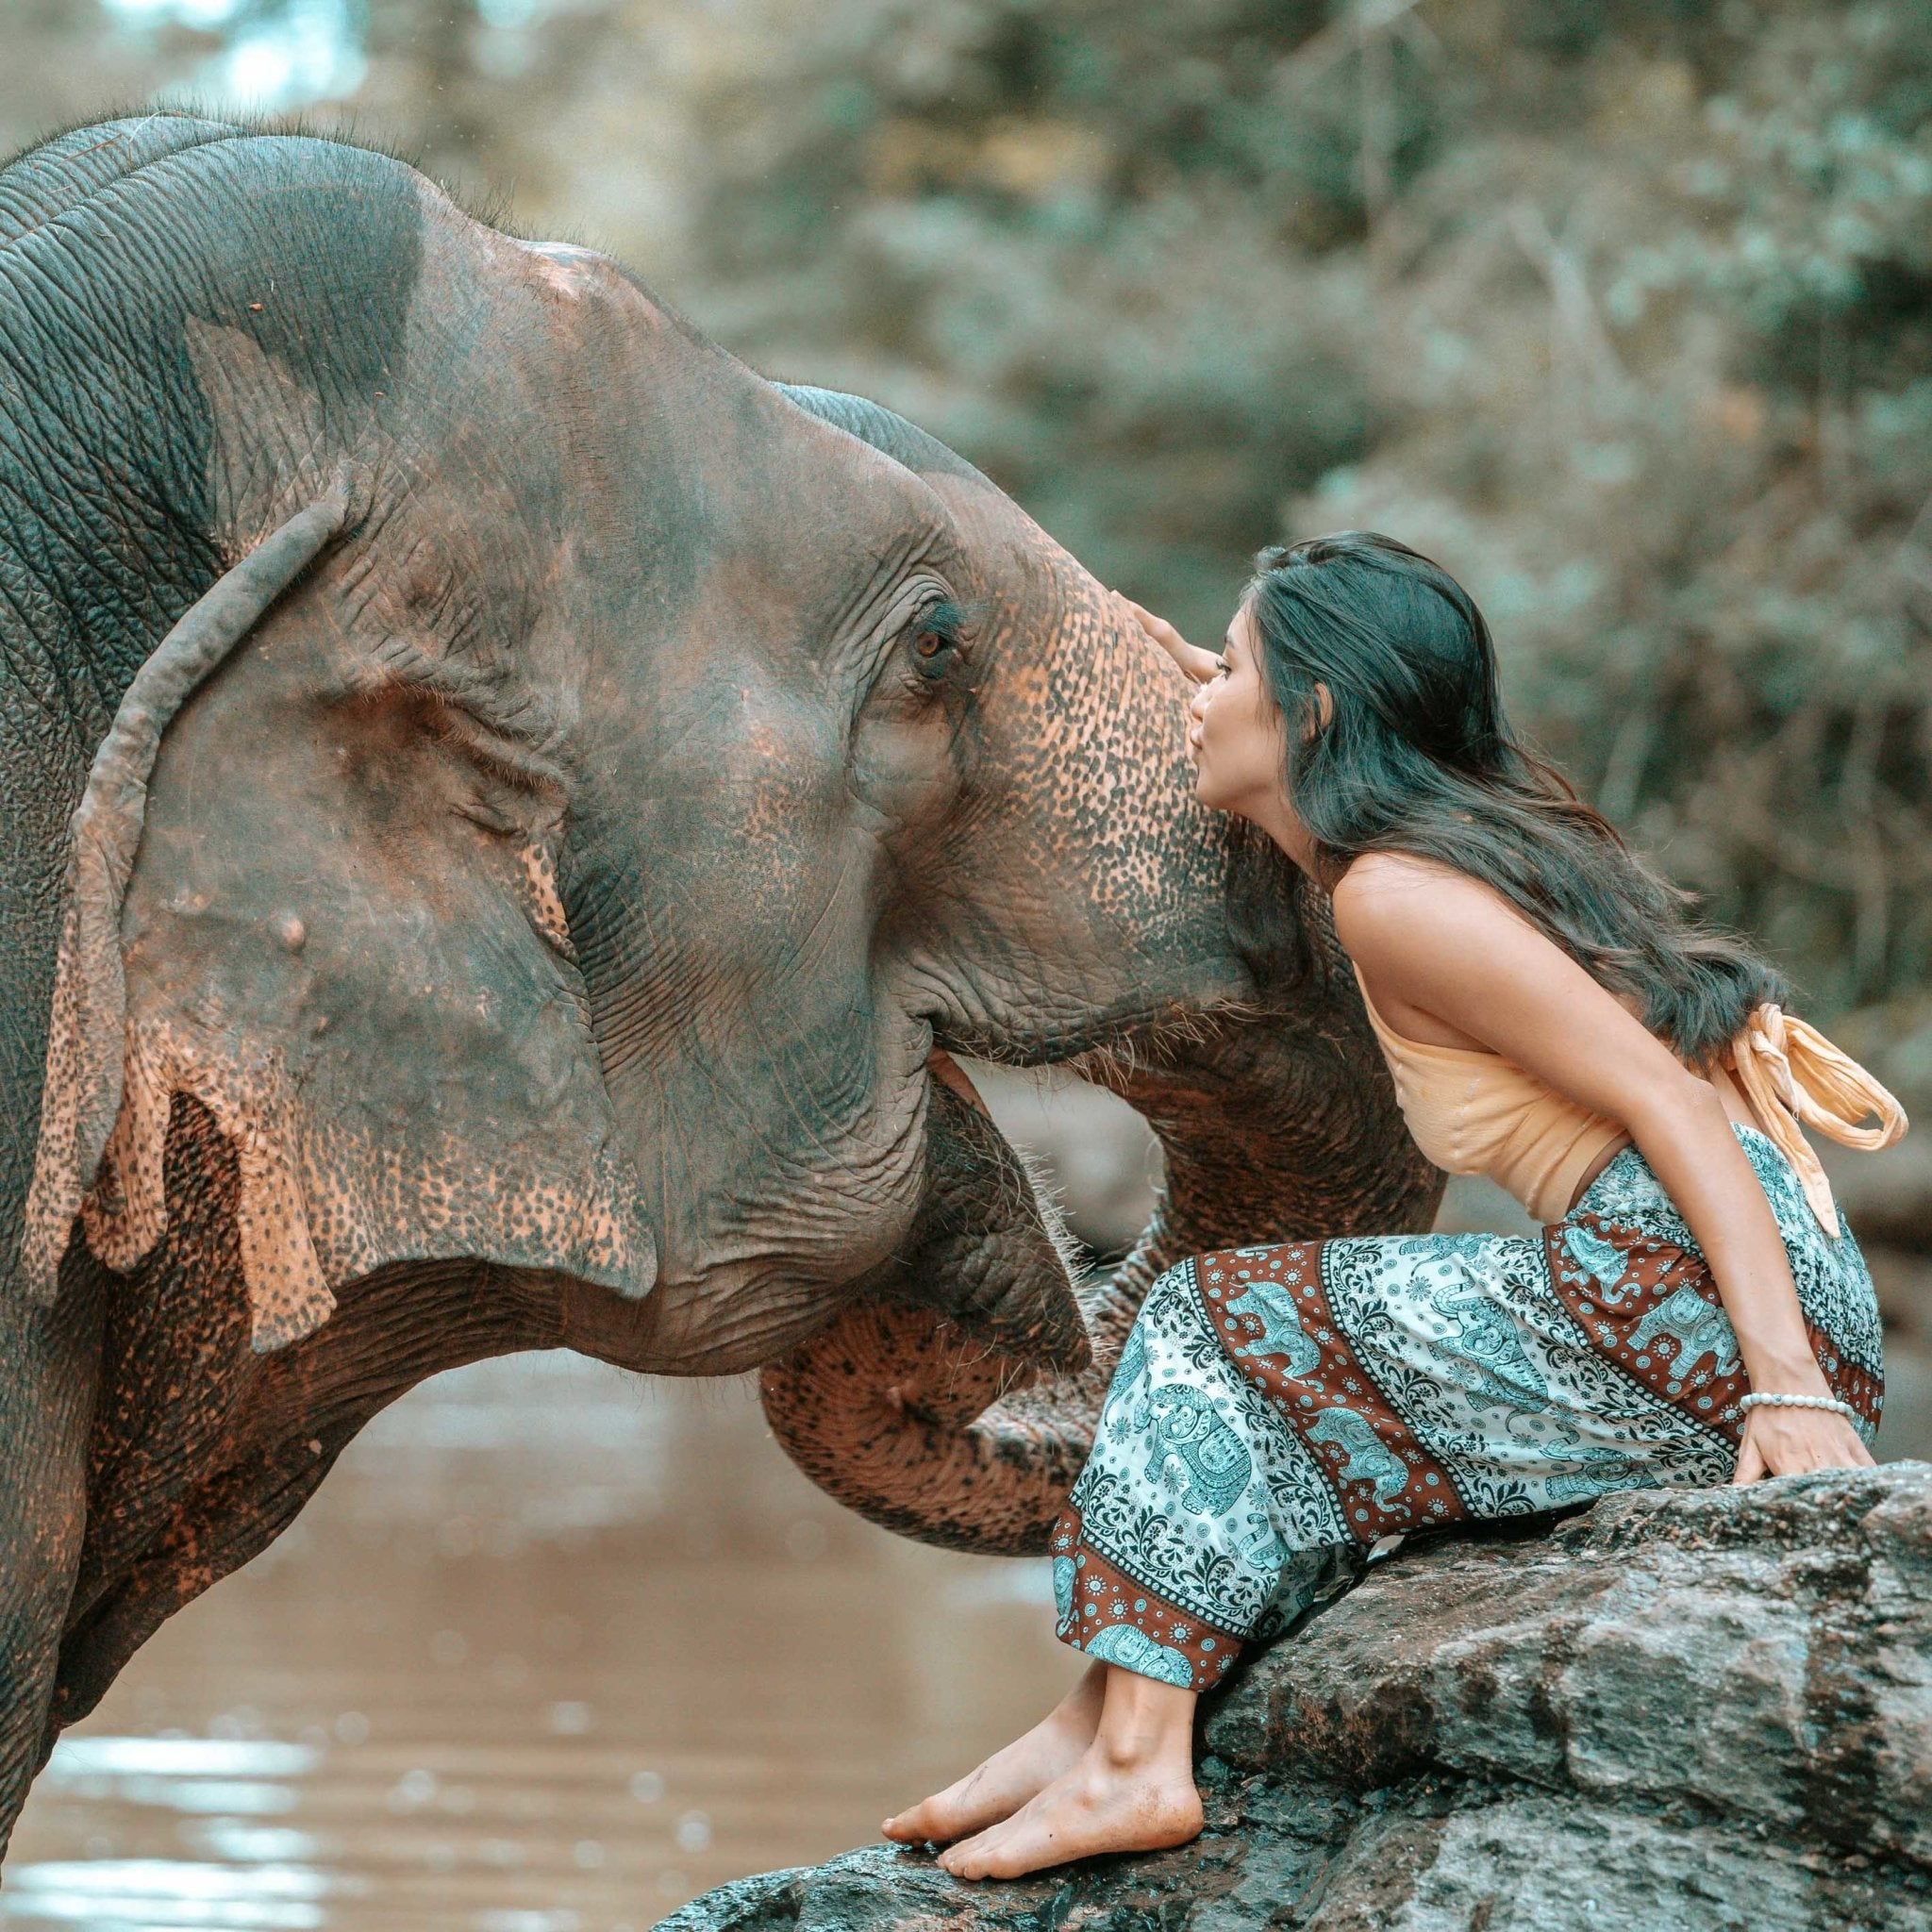 MALI PANTS - Elastic Waist Elepanta Elastic Waist Pants - Buy Today Elephant Pants Jewelry And Bohemian Clothes Handmade In Thailand Help To Save The Elephants FairTrade And Vegan